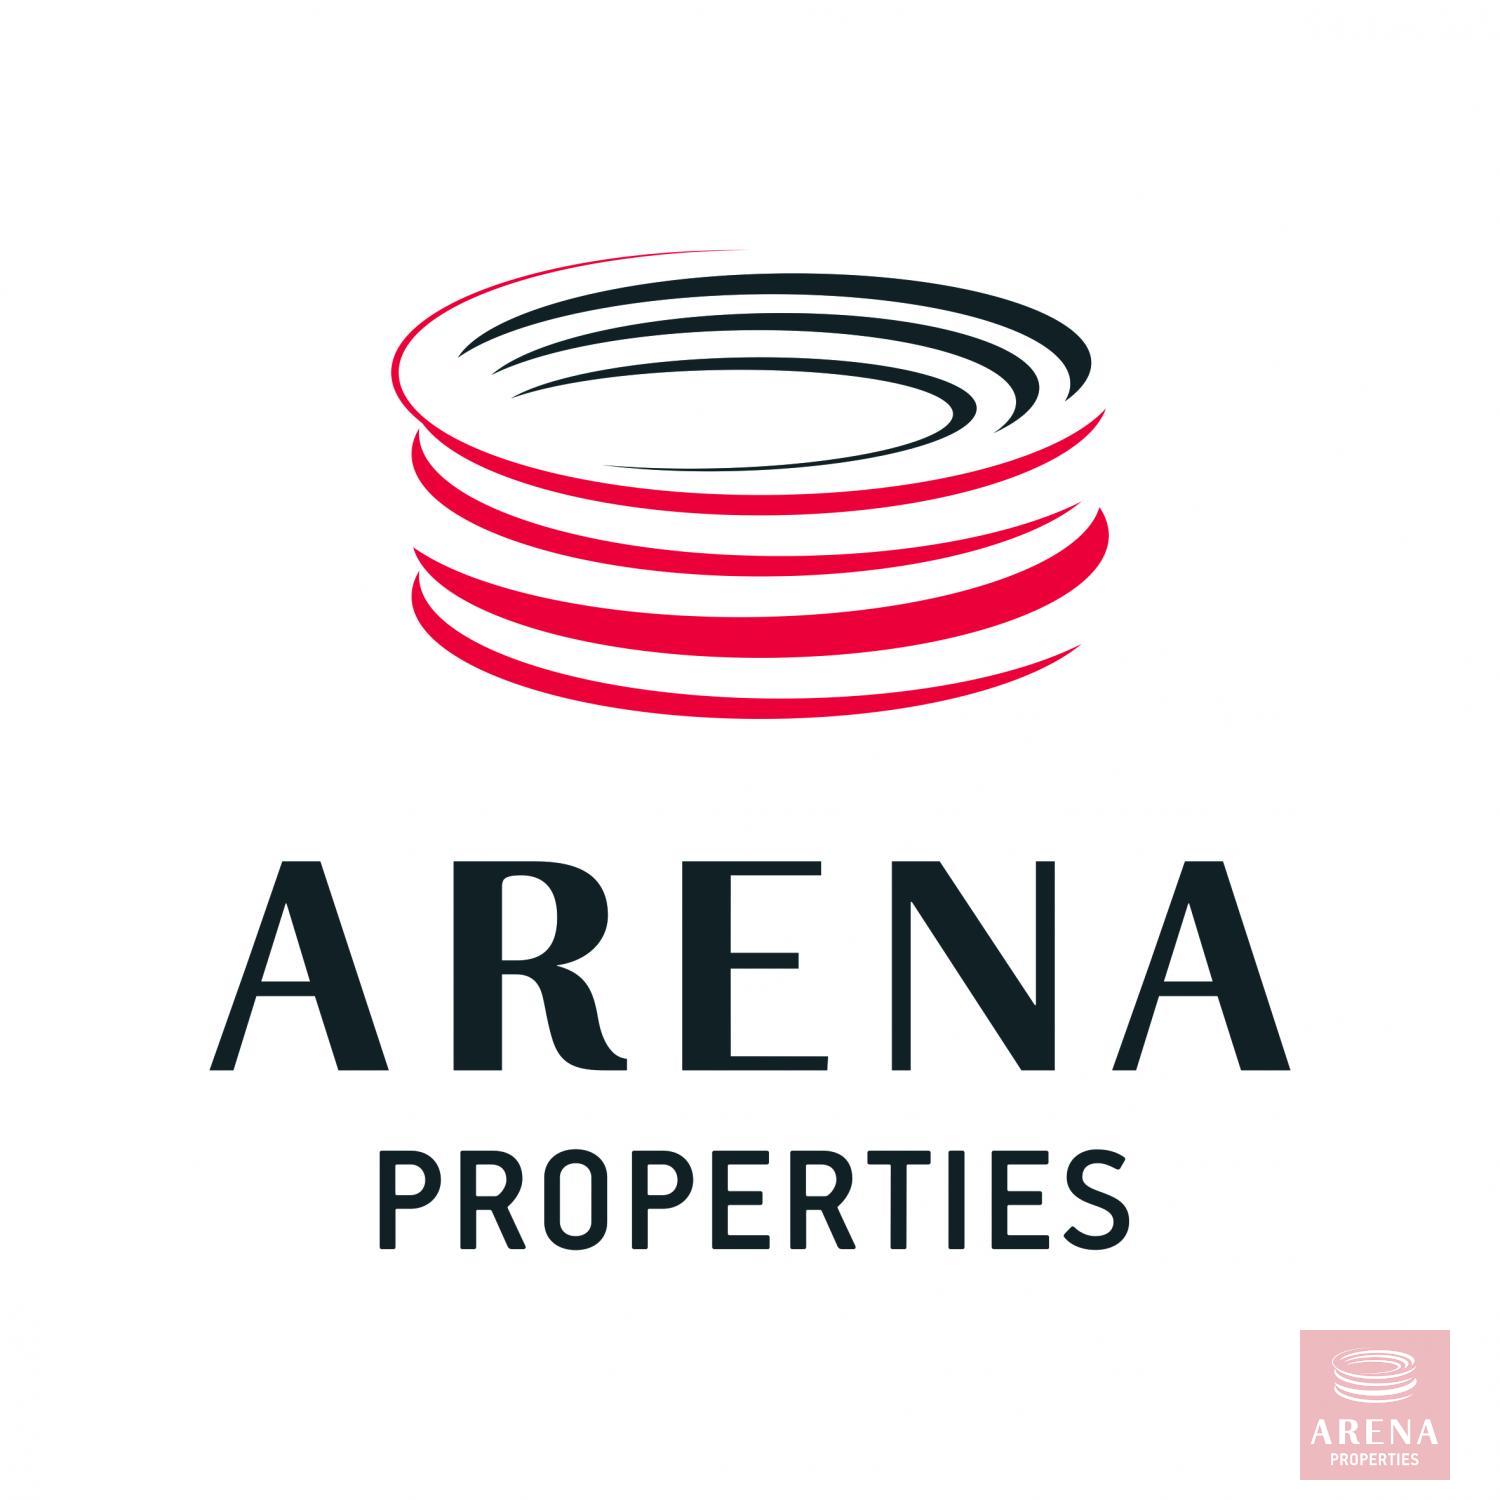 arena properties logo white 6